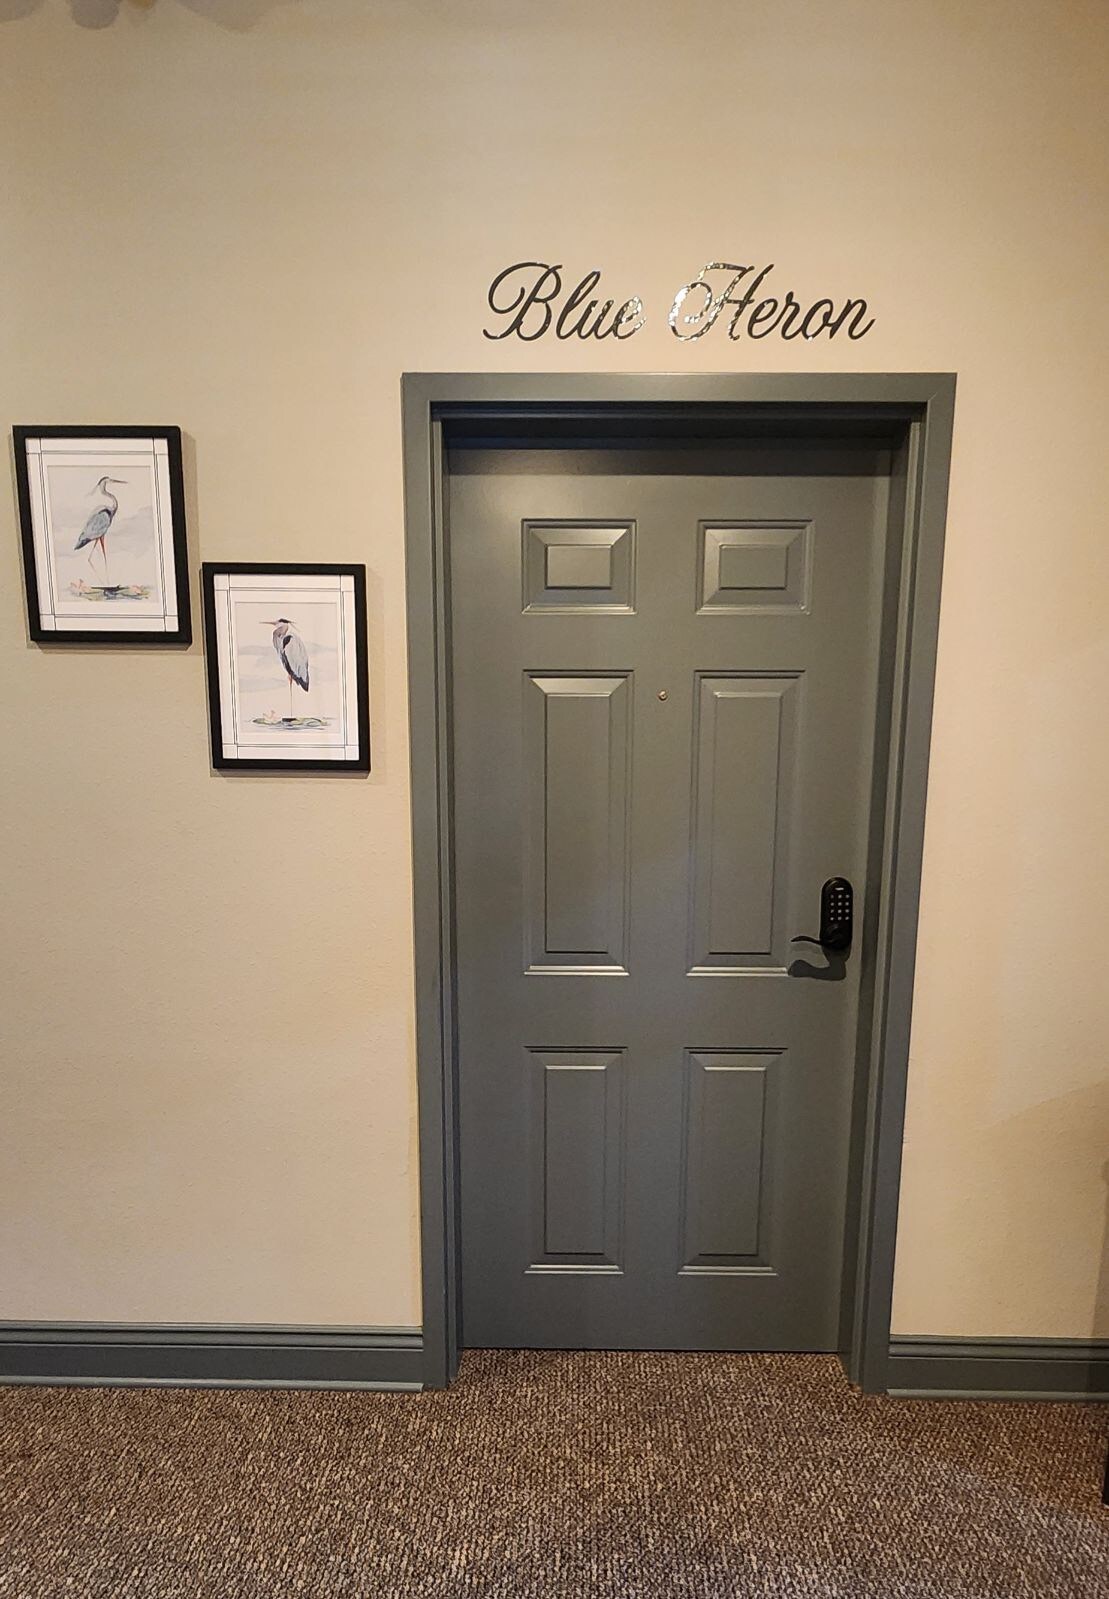 The Blue Heron: Spacious Room in Quaint Hotel